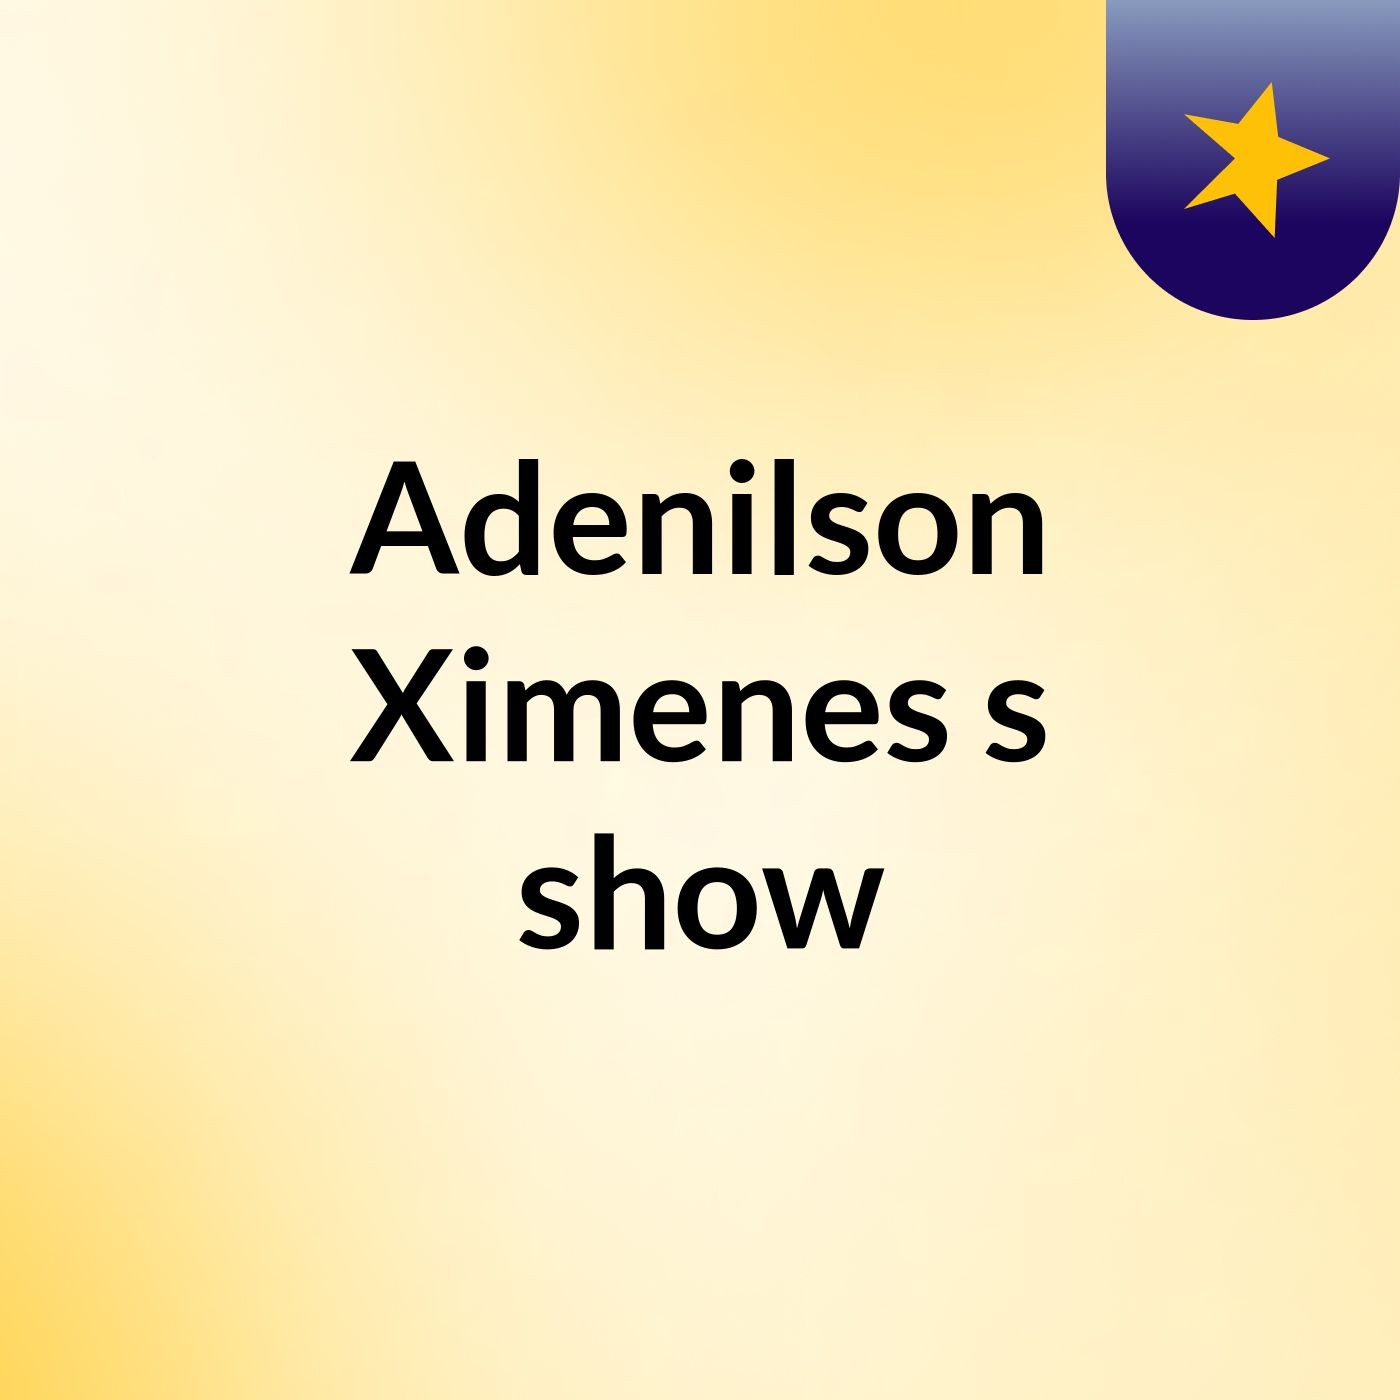 Adenilson Ximenes's show